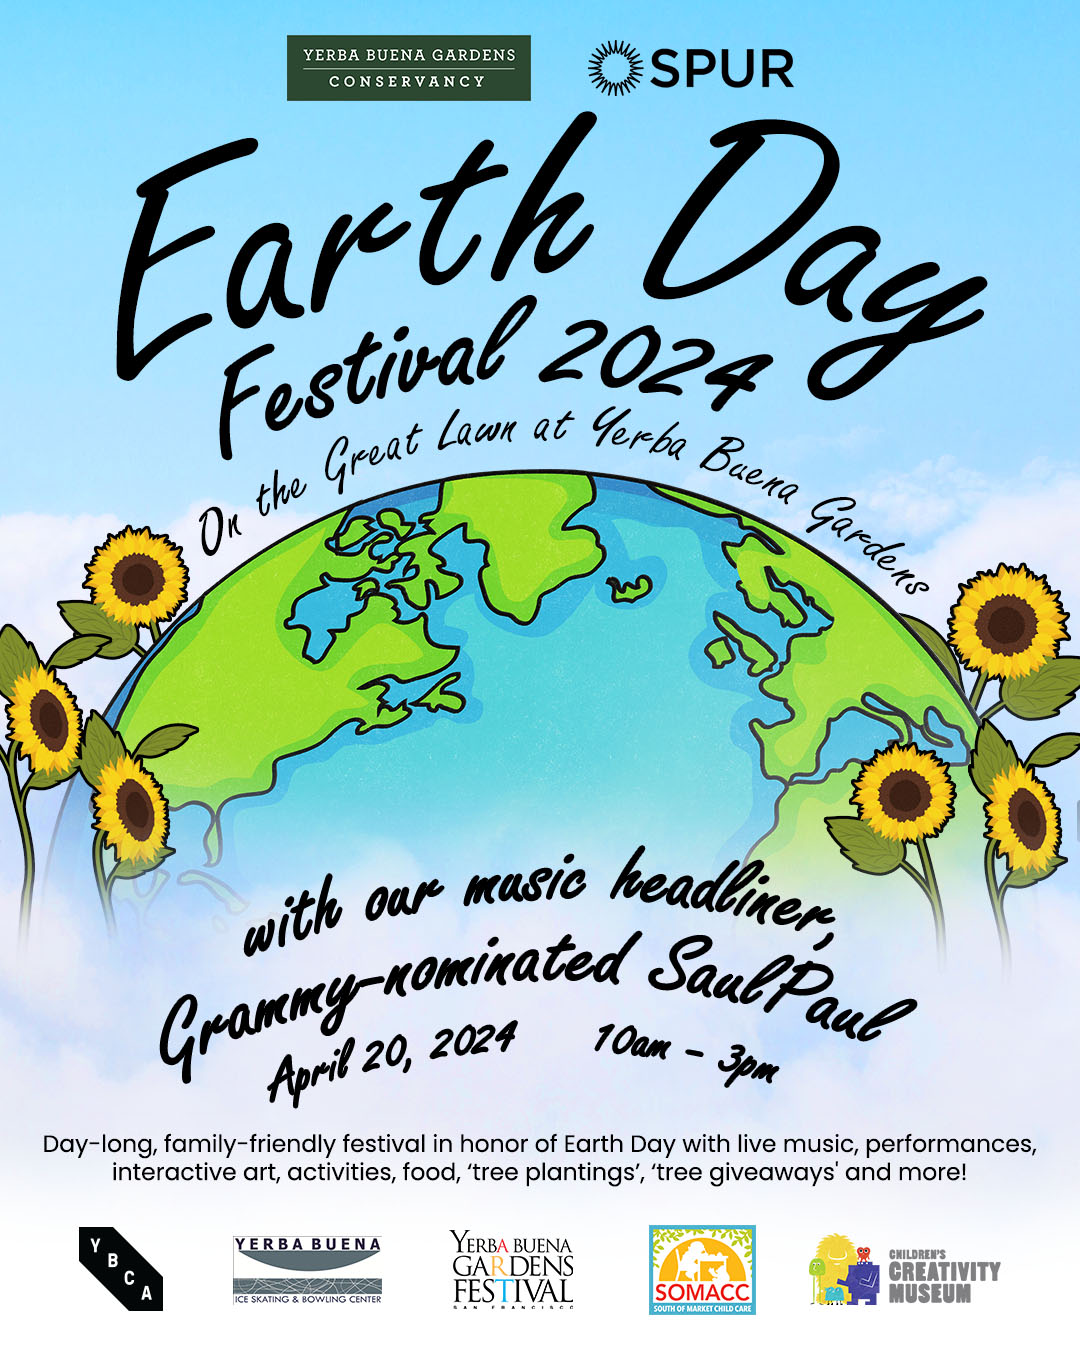 SPUR-YBCA-Conservancy Earth-Day-Festival-2024 SanFrancisco 20APR2024